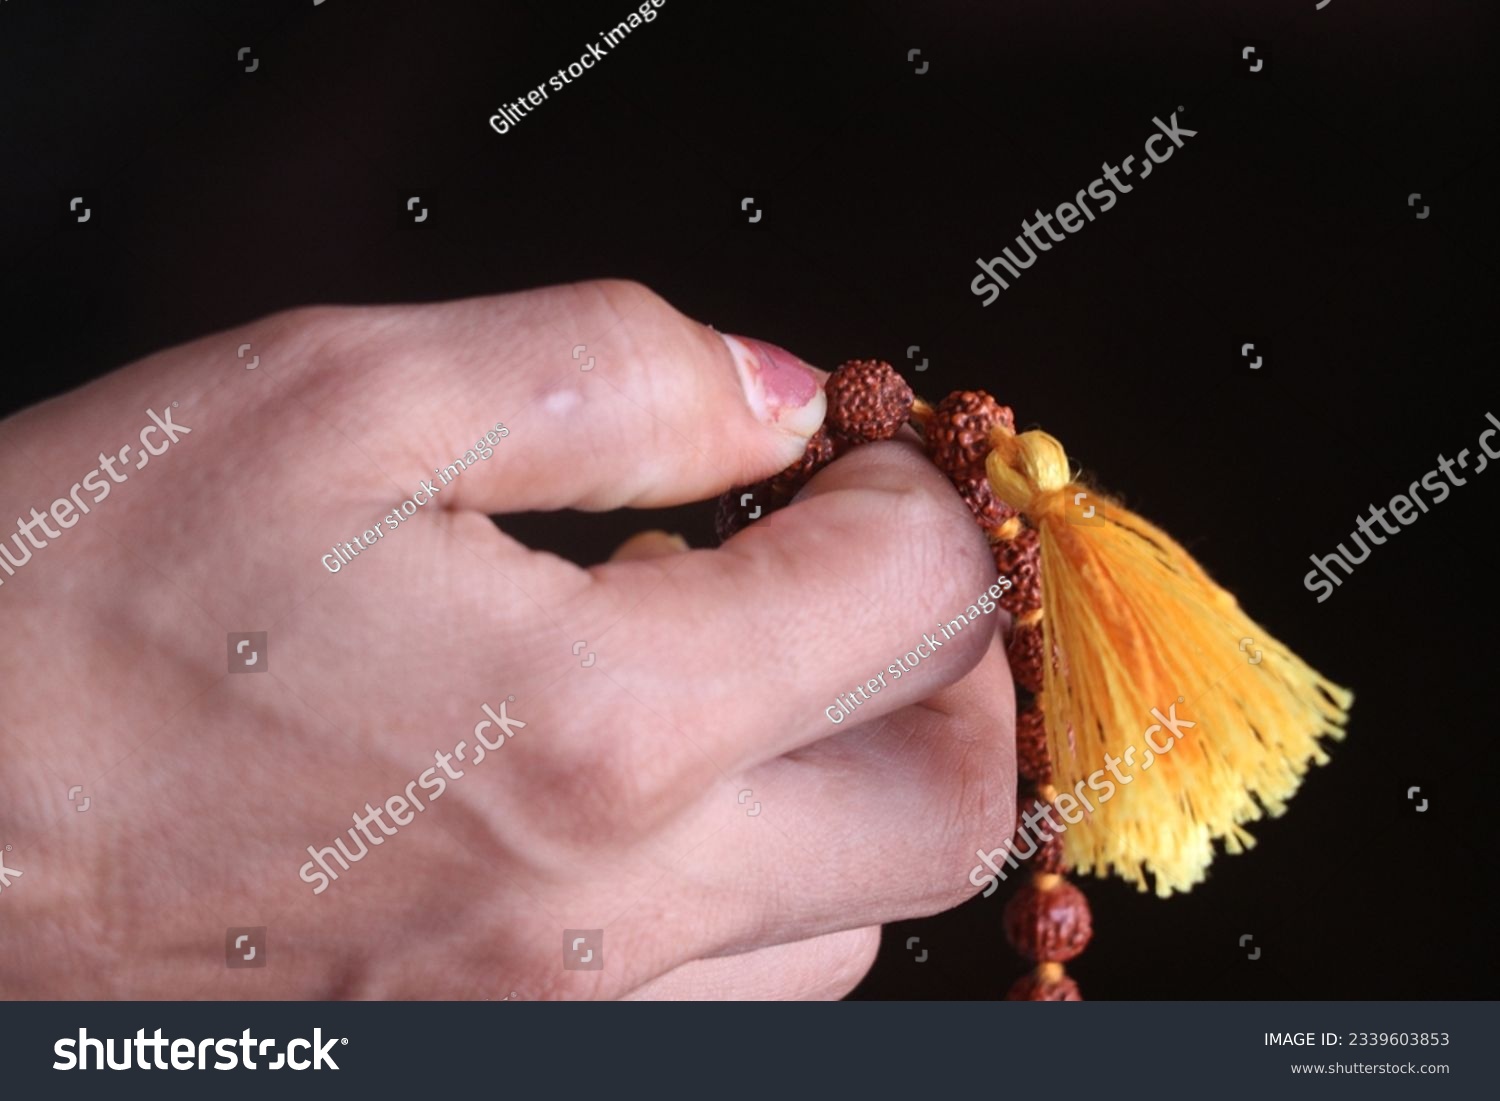 Buddhist prayer beads in a woman's hand on a dark background #2339603853